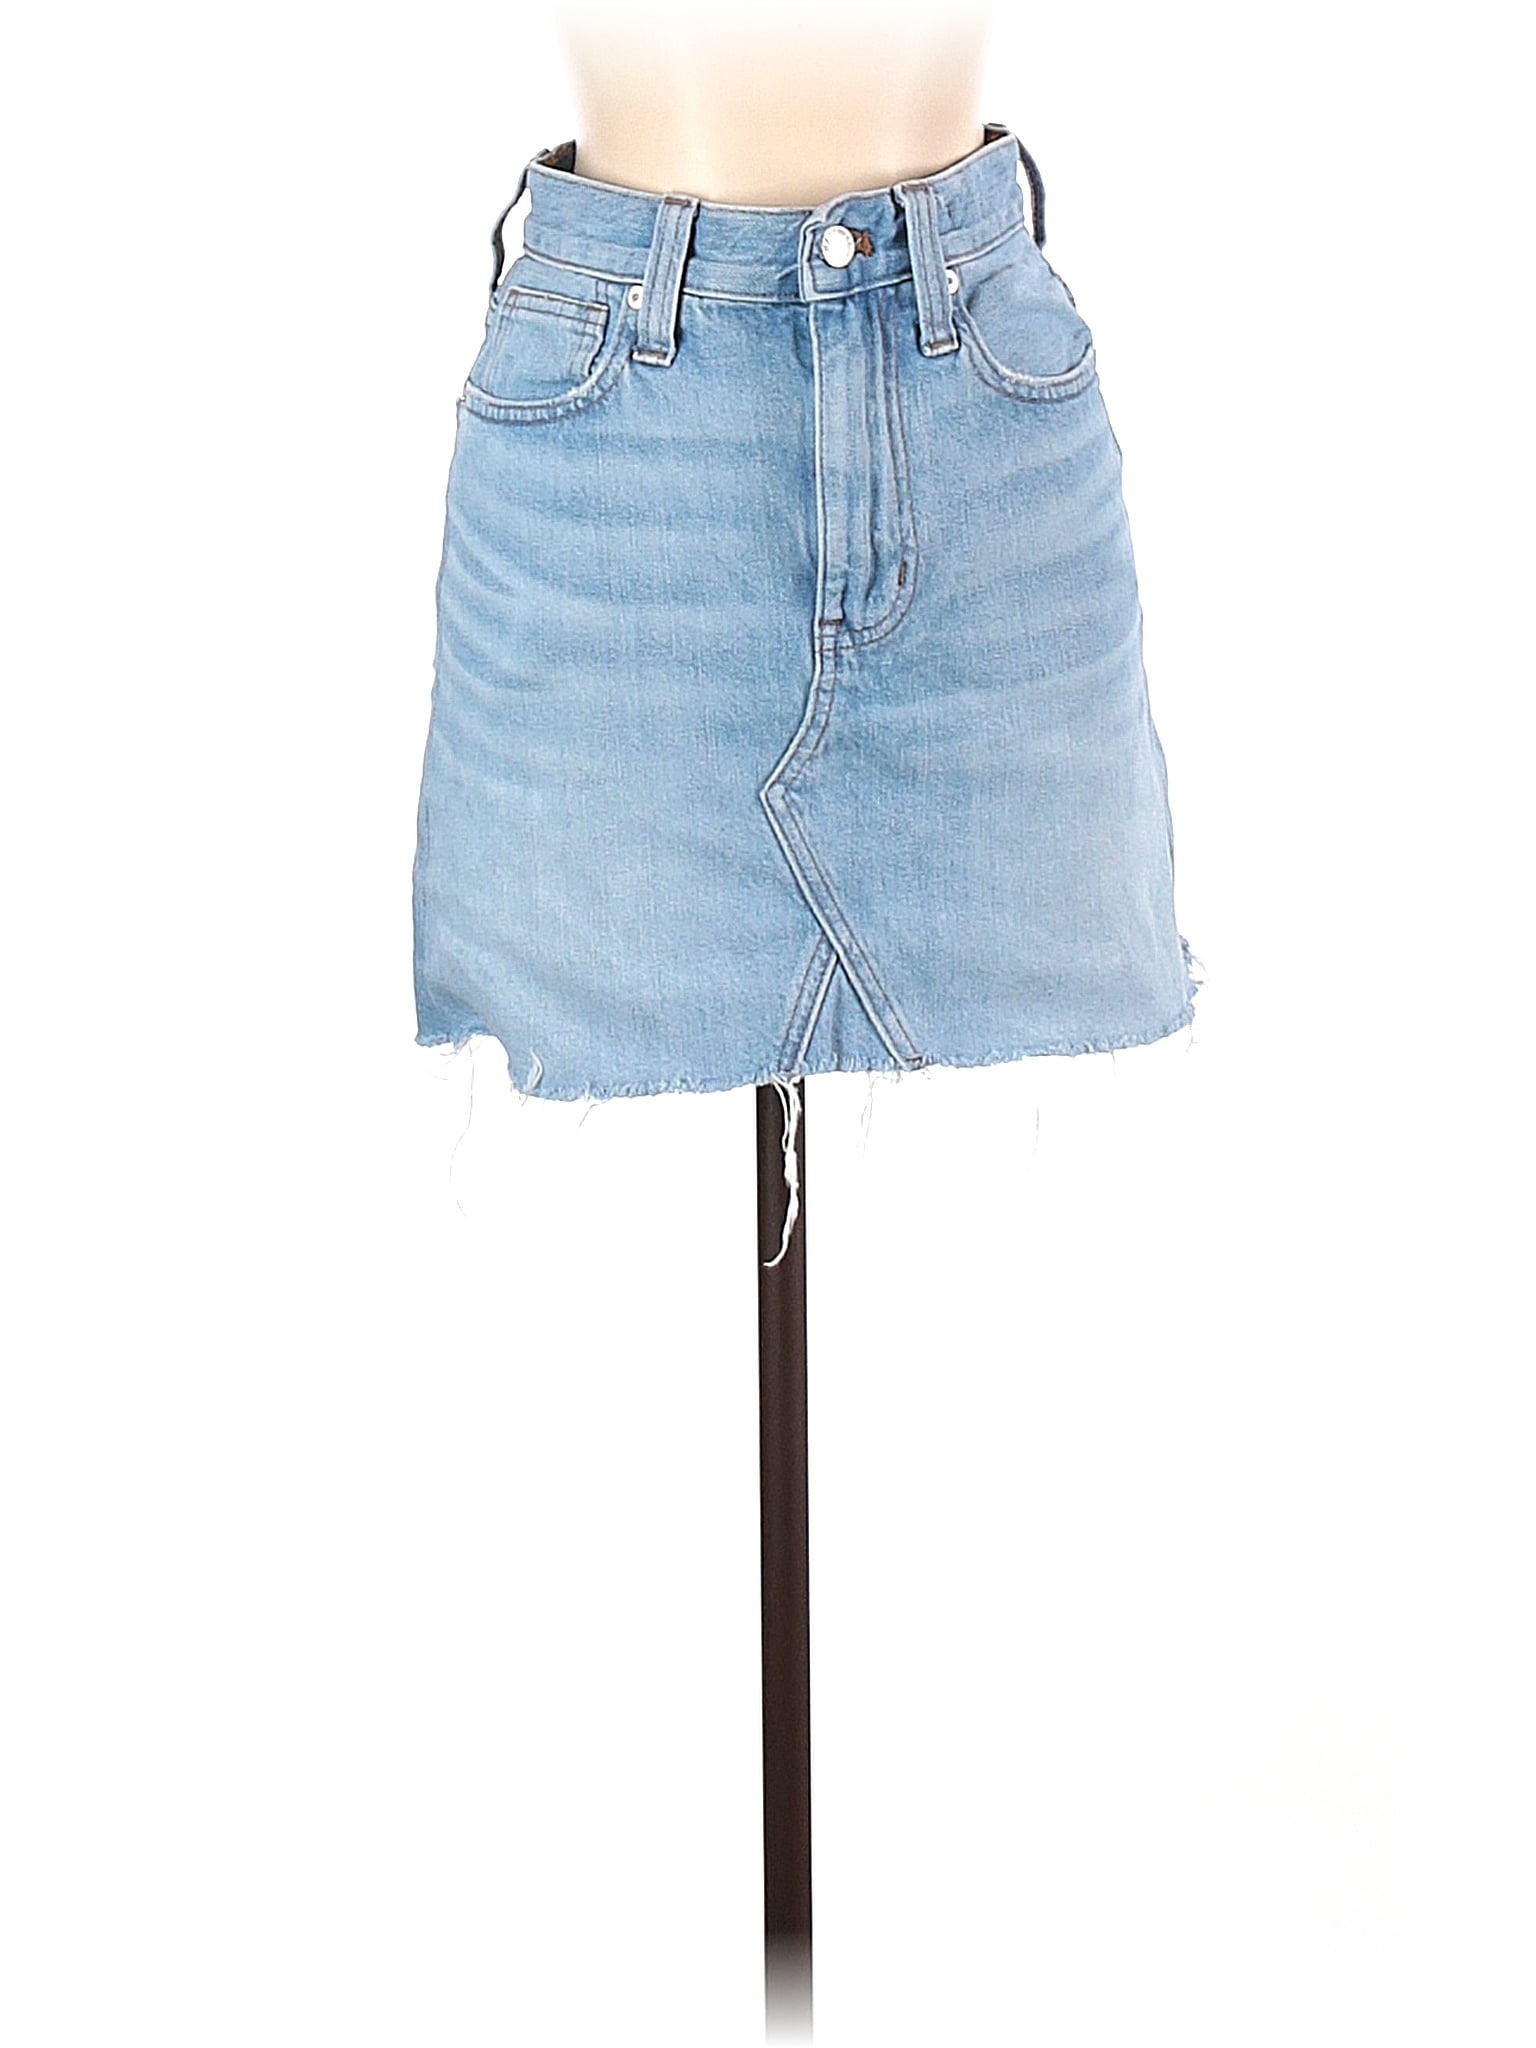 Madewell Solid Blue Denim Skirt 24 Waist - 88% off | thredUP